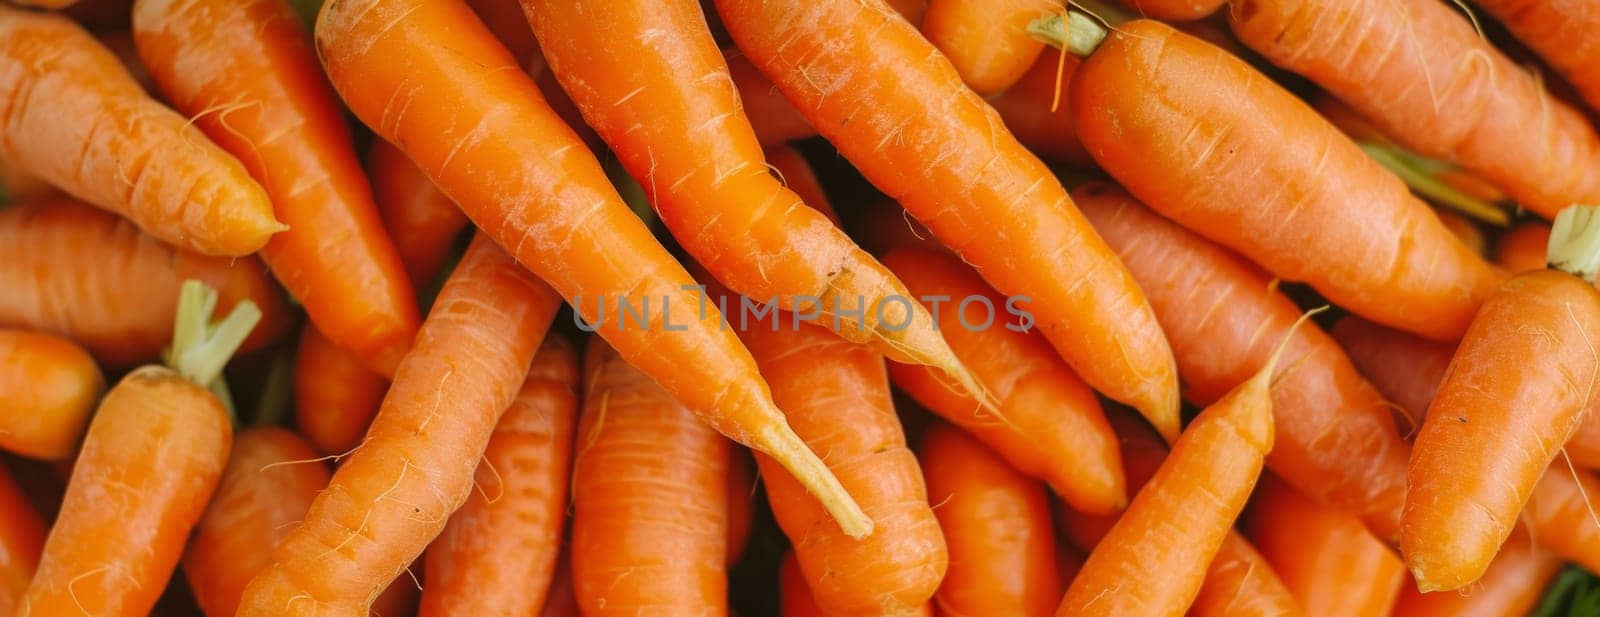 A Heap of Vibrant Orange coloured Carrots.